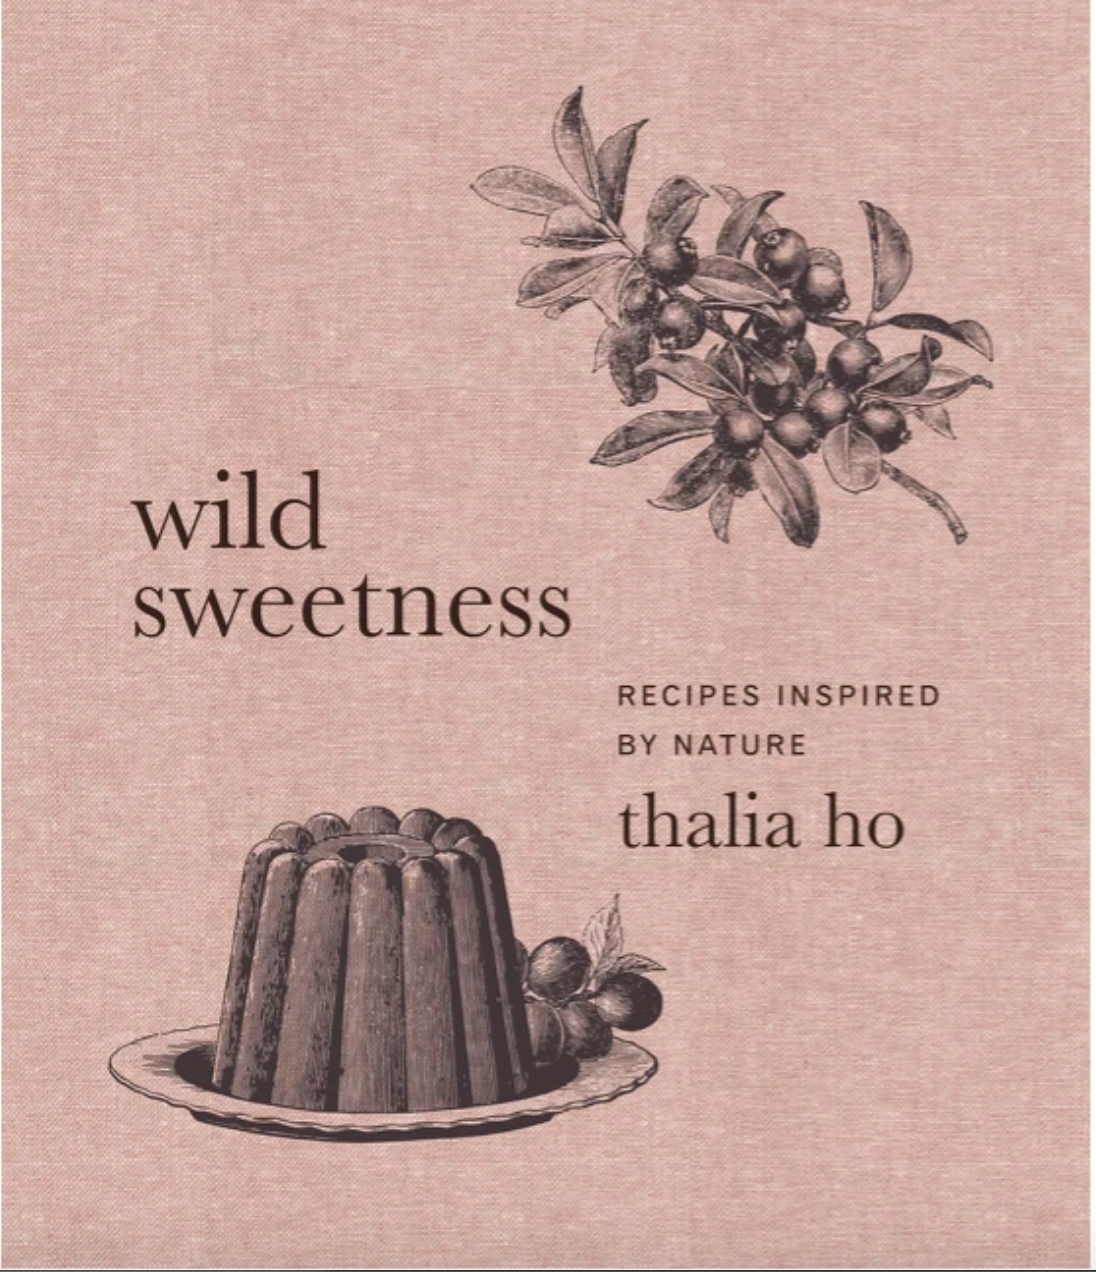 Wild Sweetness by Thalia Ho